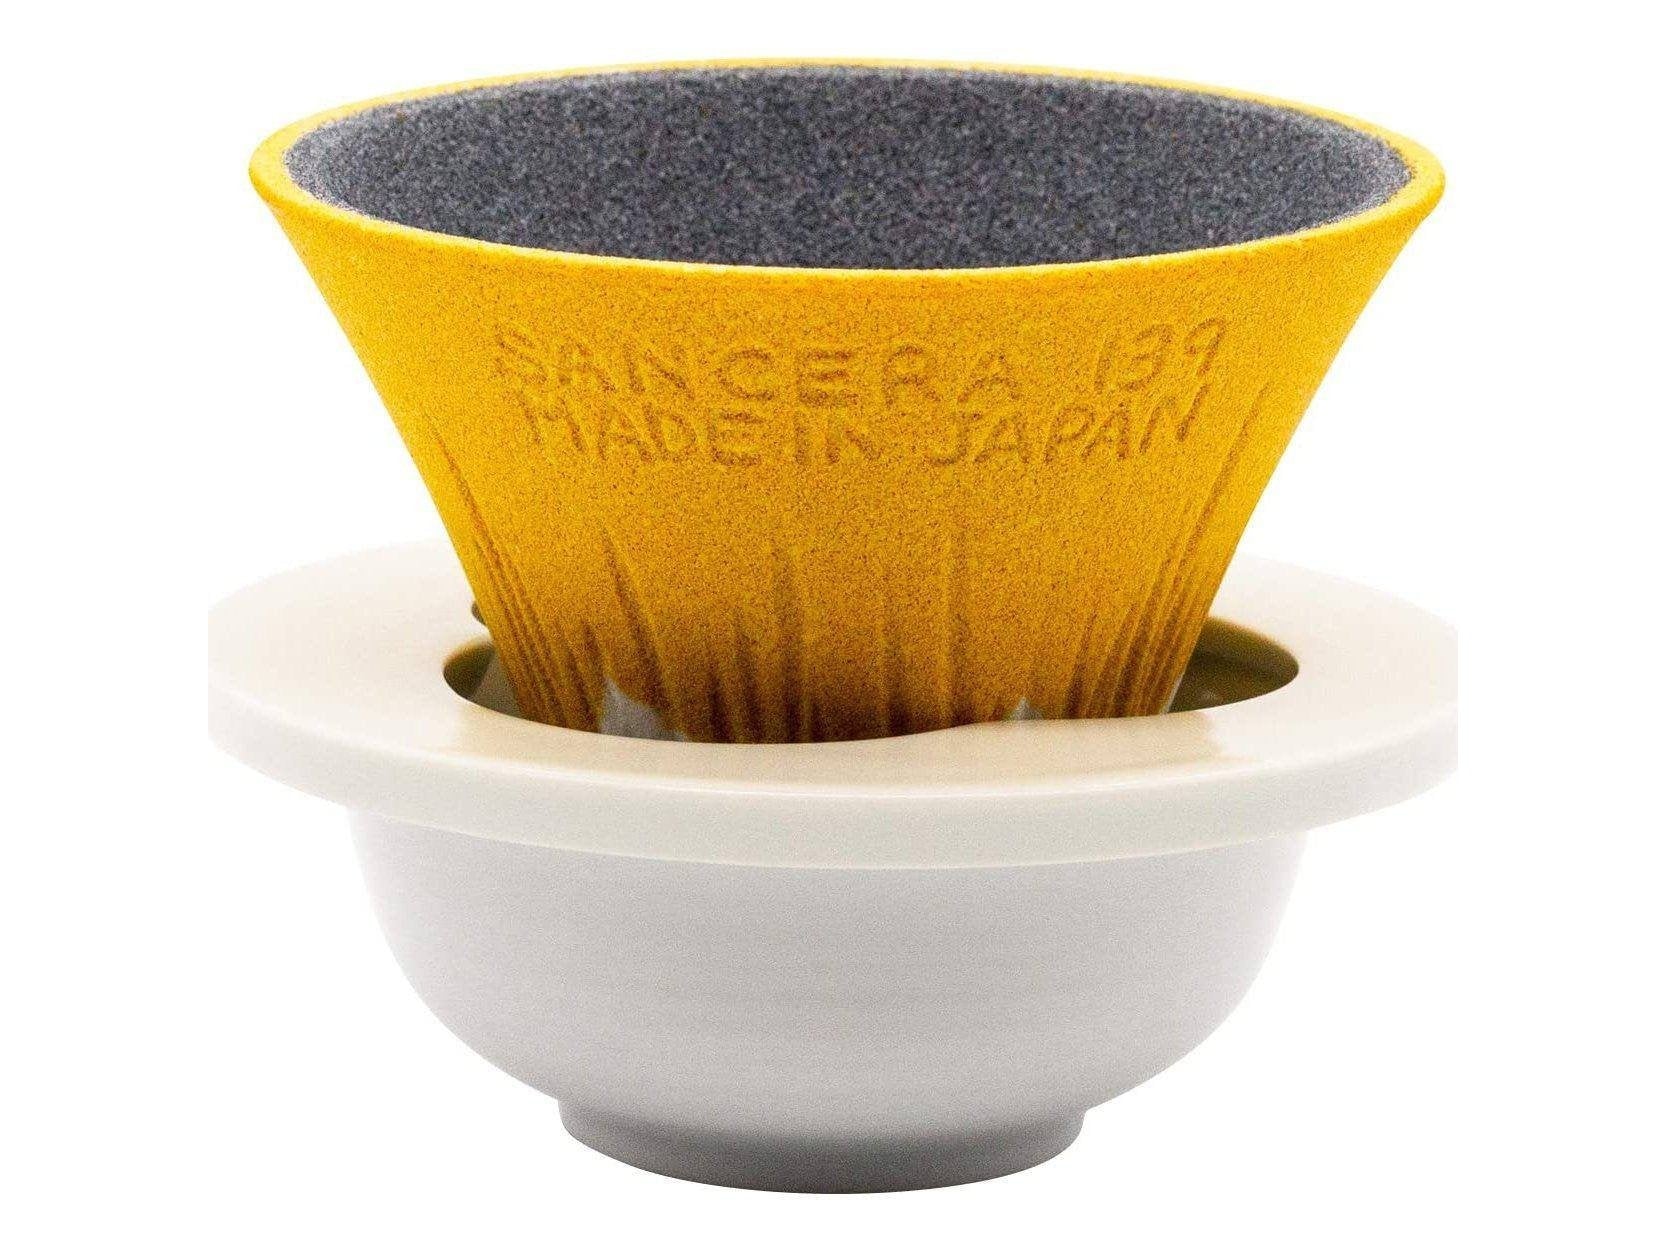 COFIL Fuji Ceramic Coffee Filter